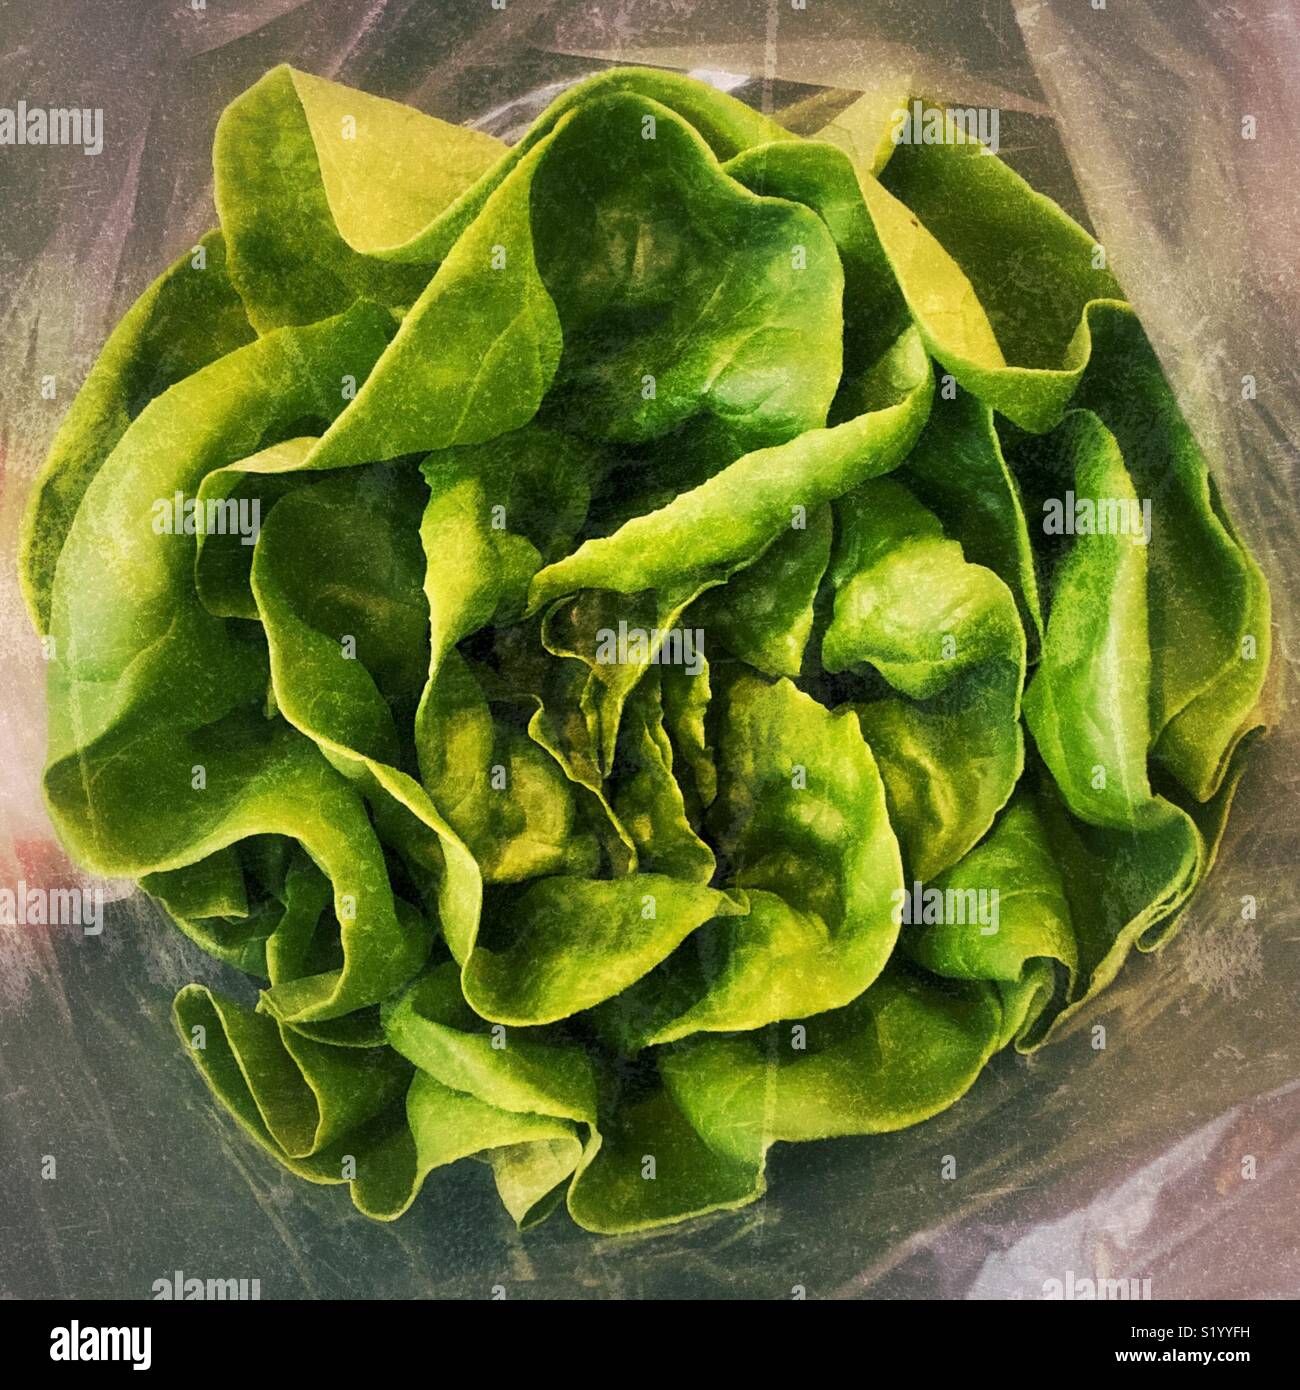 Fresh green leaf lettuce in a plastic bag Stock Photo